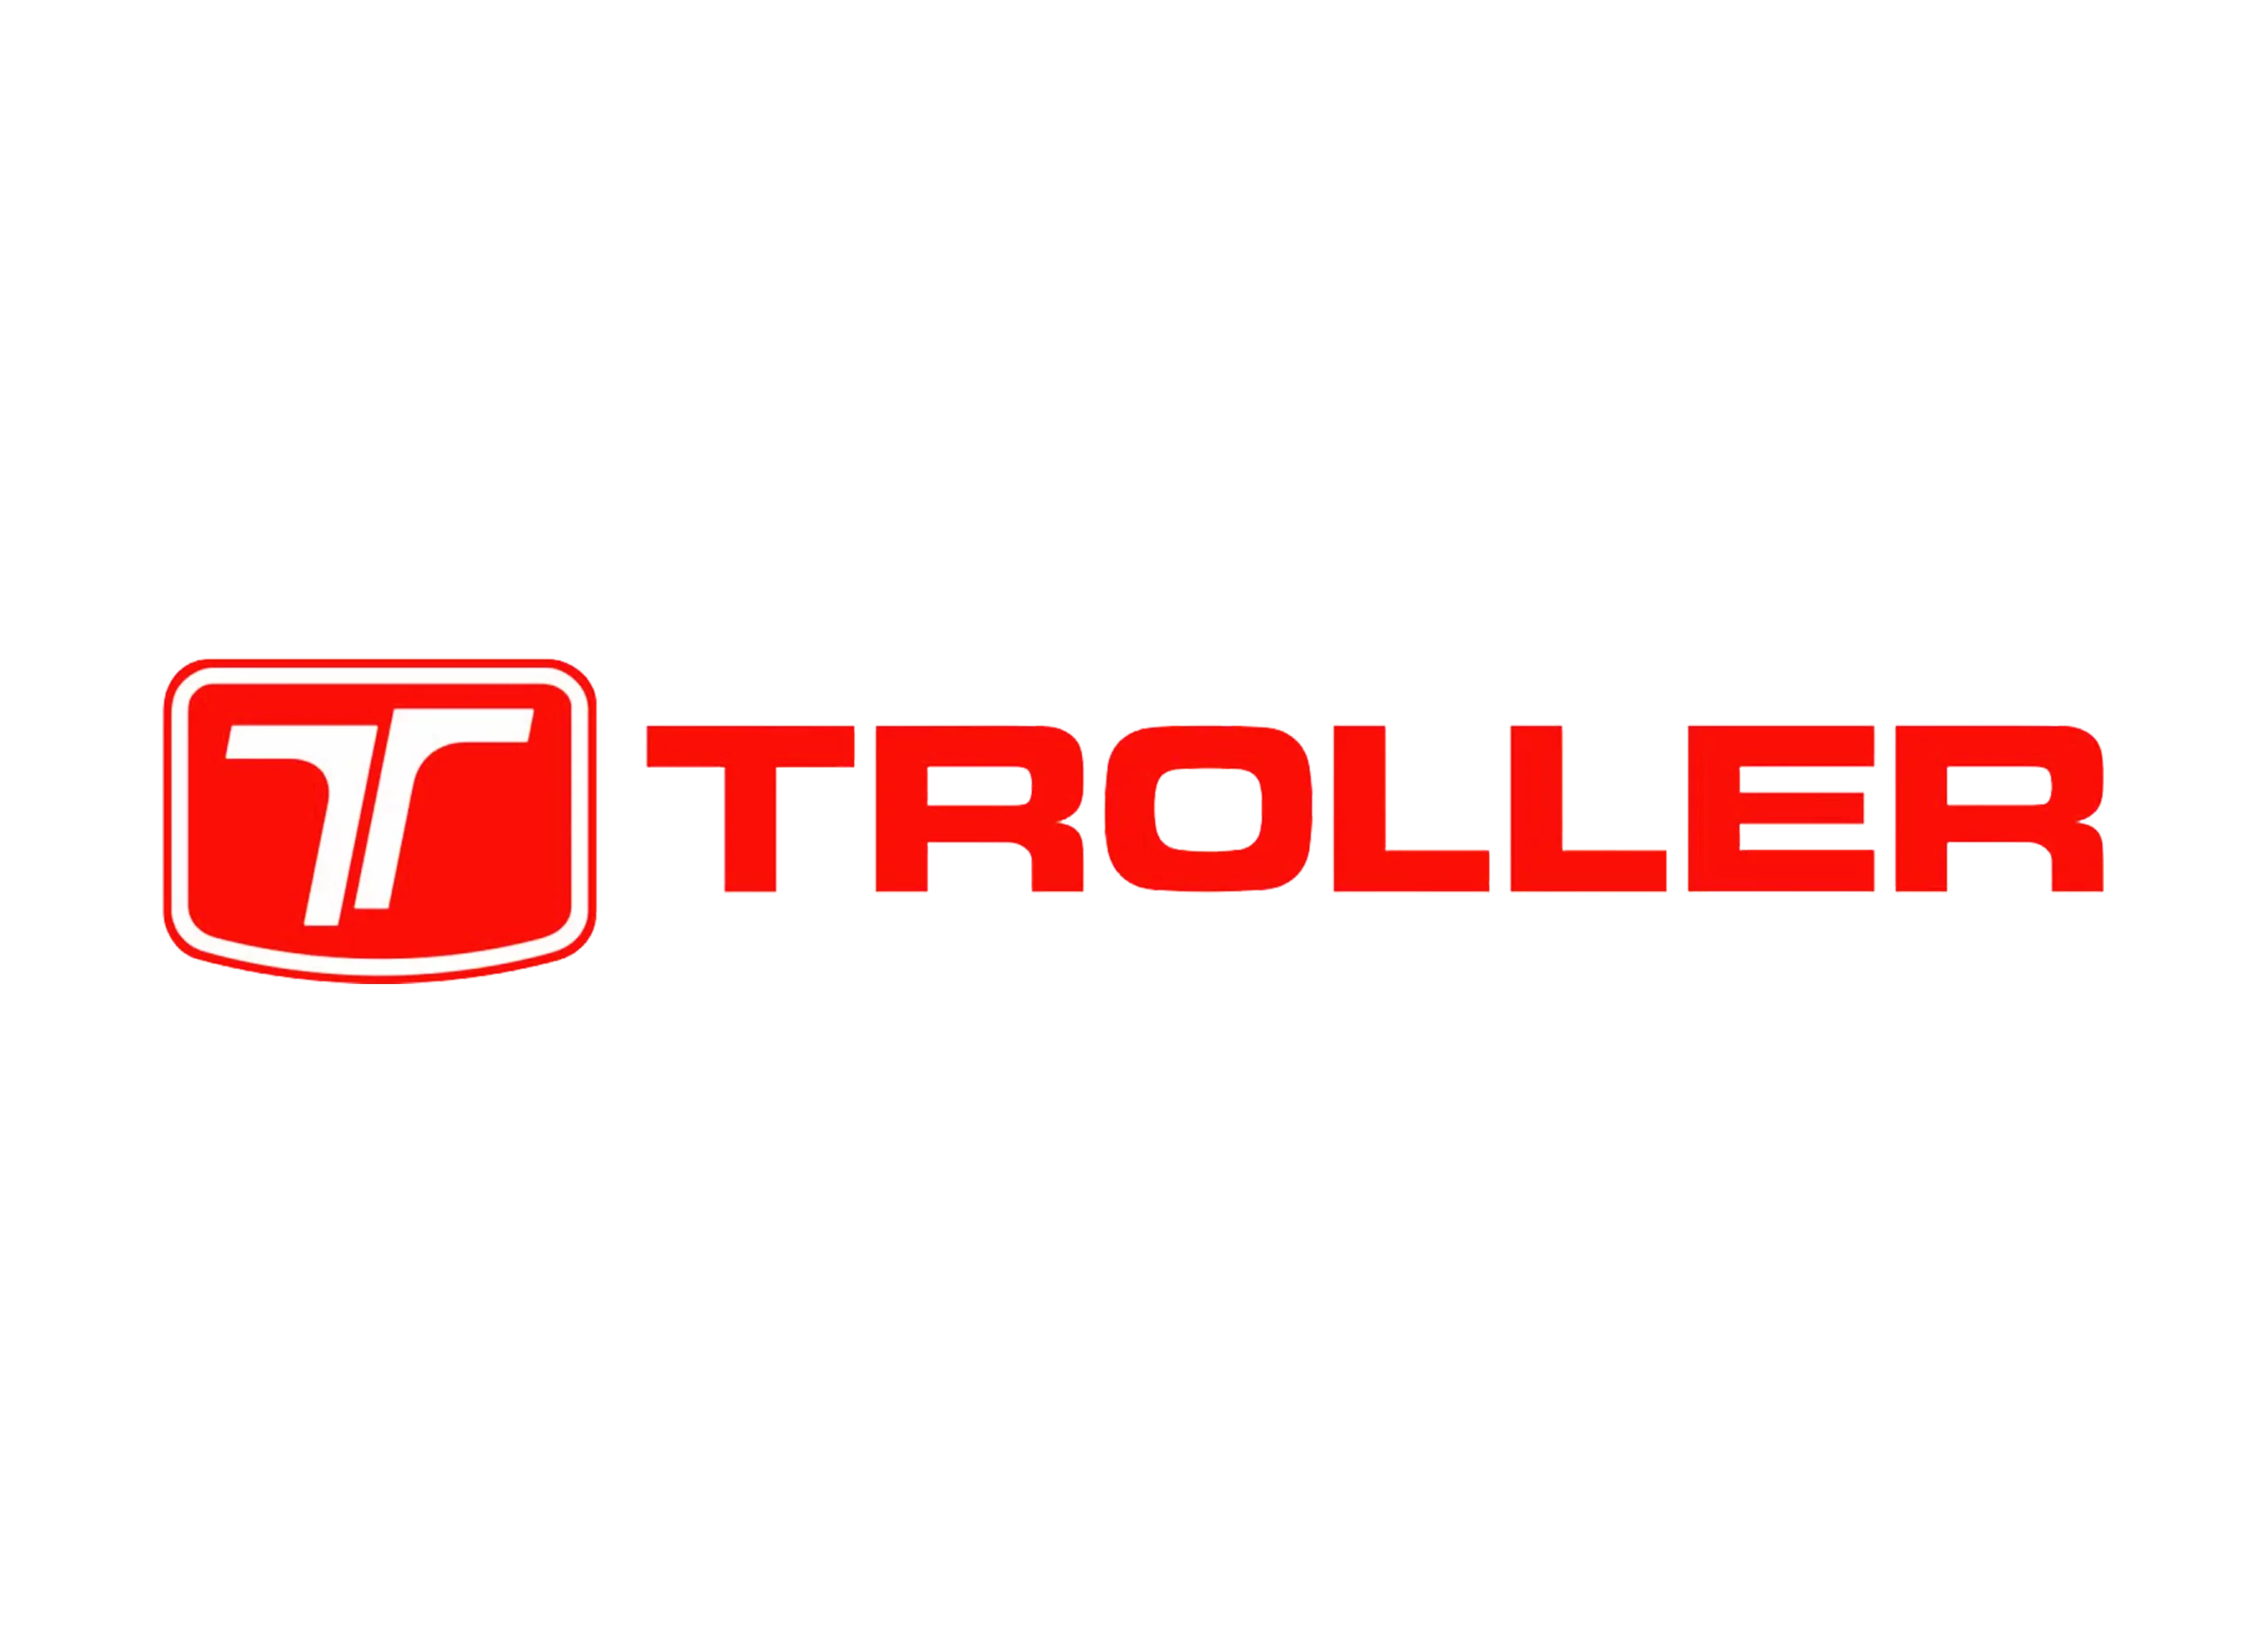 Troller logo 1995-present